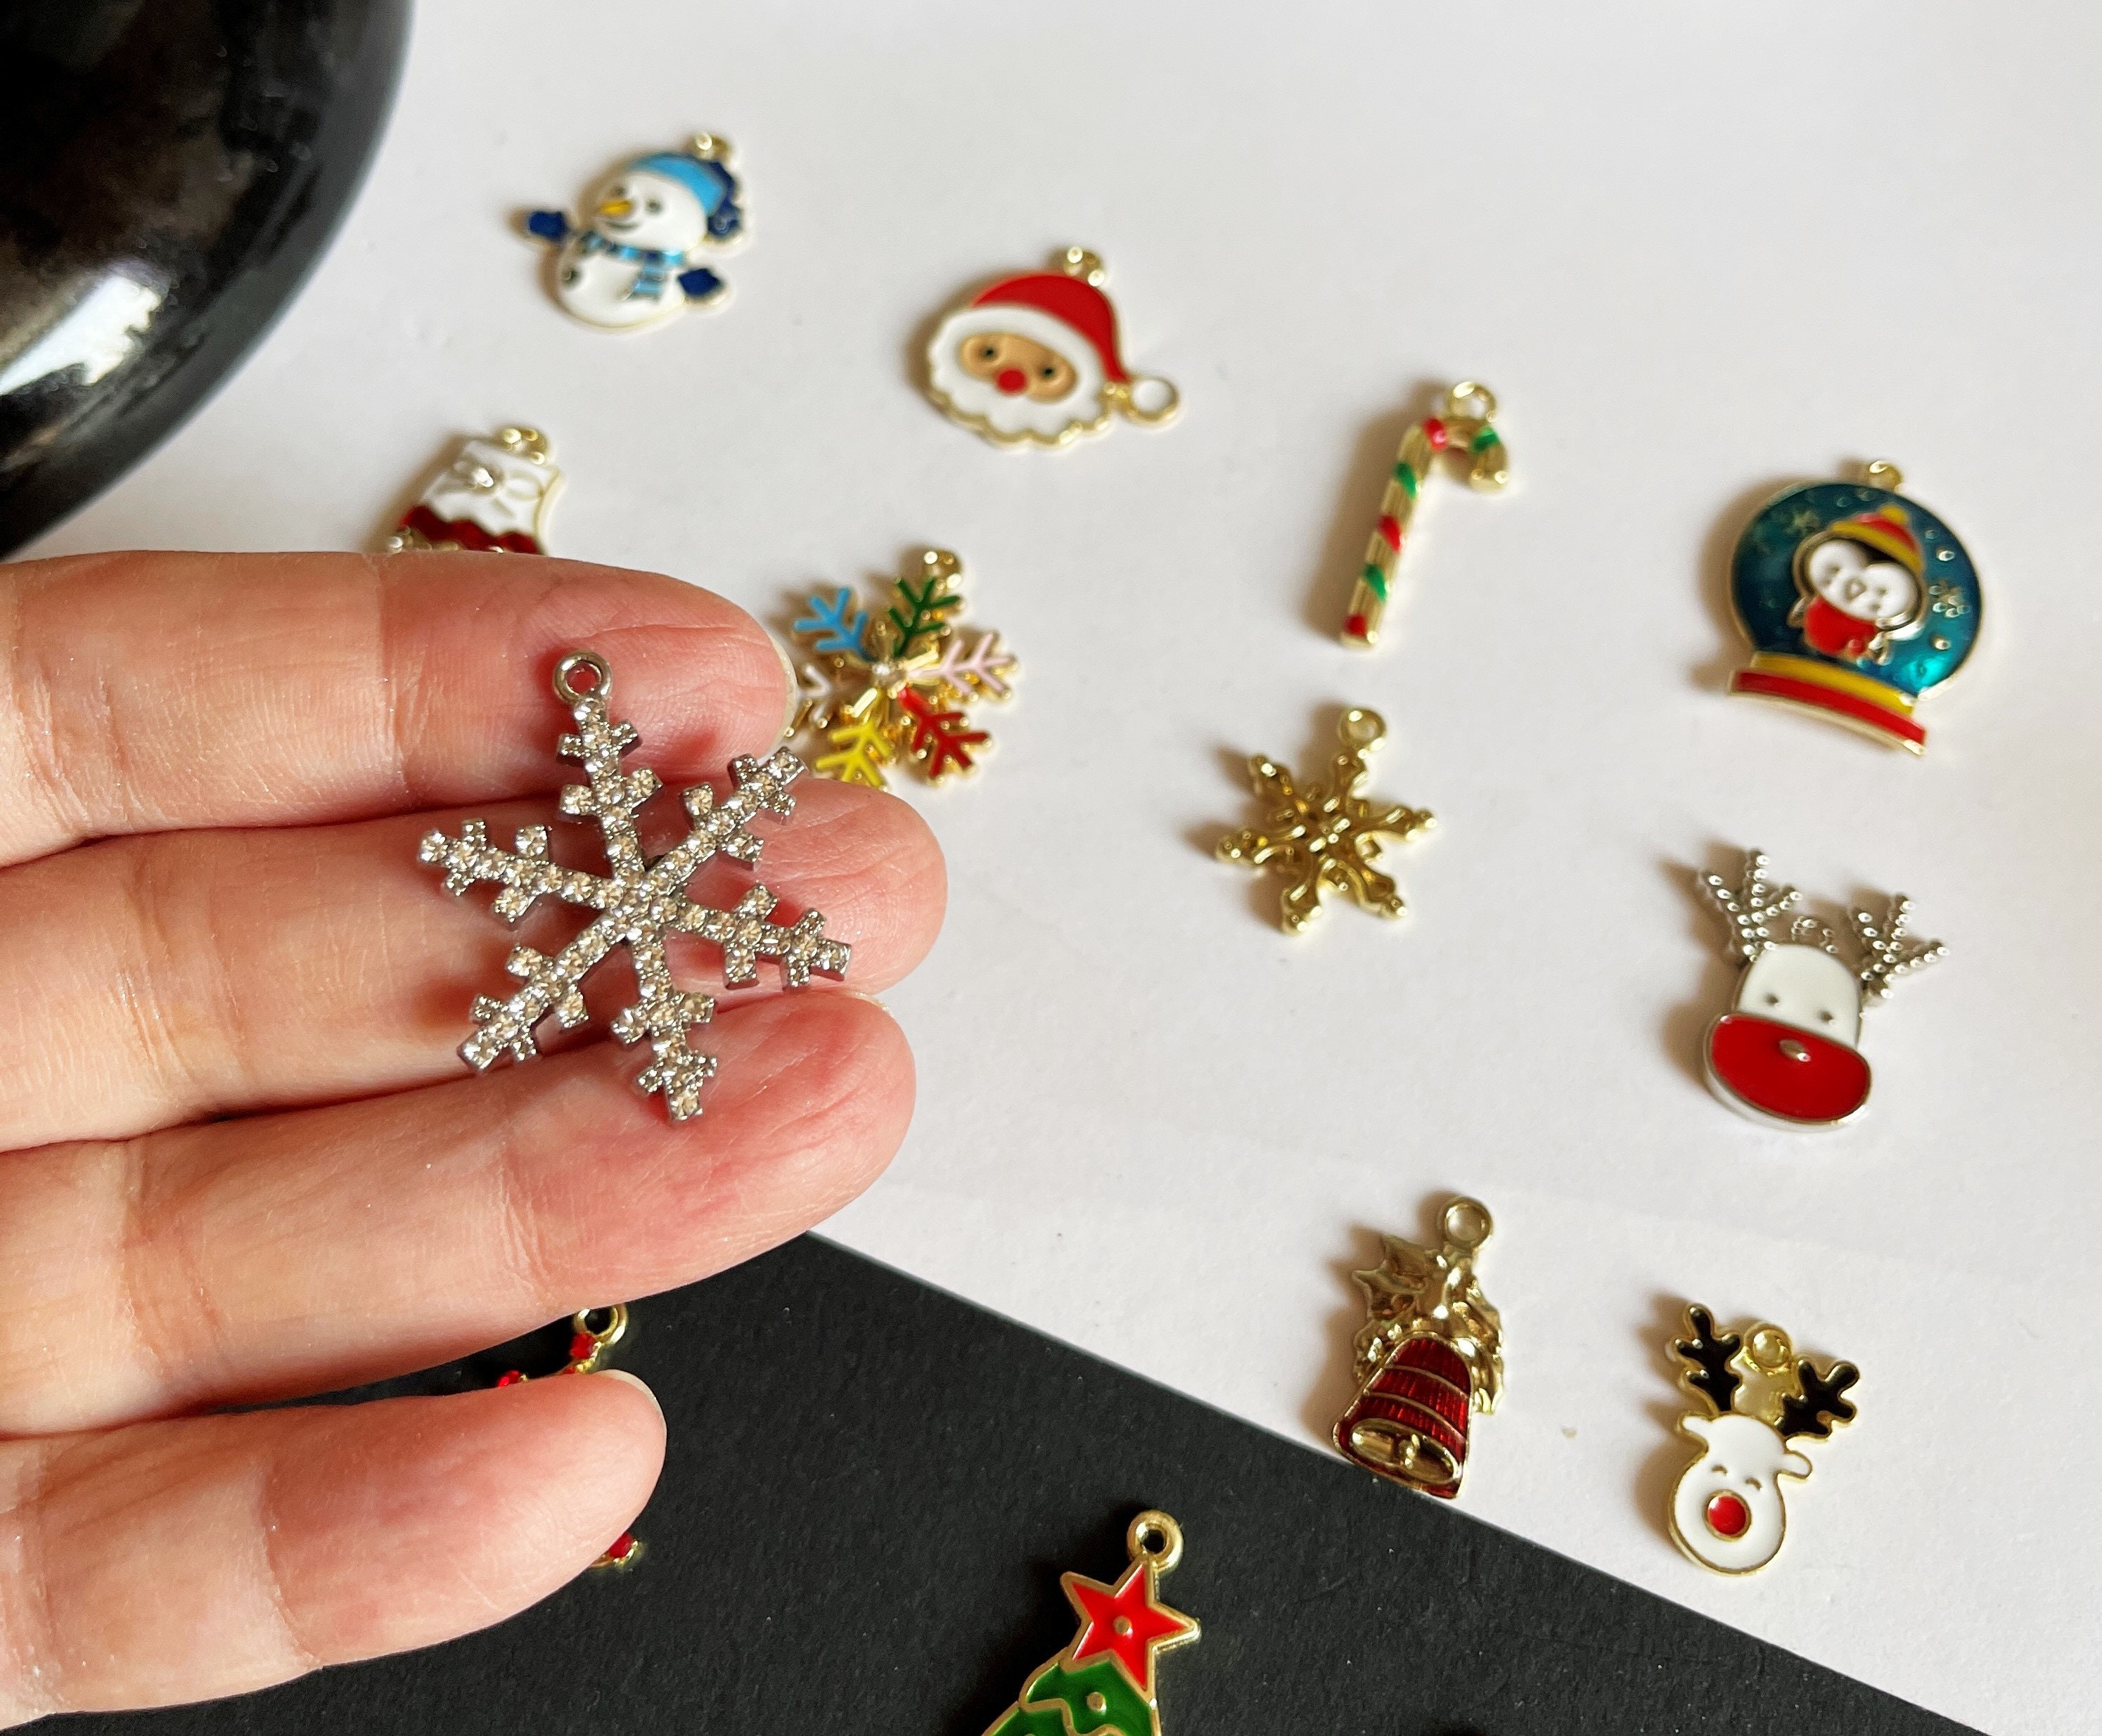 SUNNYCLUE 1 Box DIY 10 Pairs Christmas Enamel Charms Earring Making Kit  Jingle Bell Charms for Jewelry Making Rhinestone Christmas Charms Snowflake